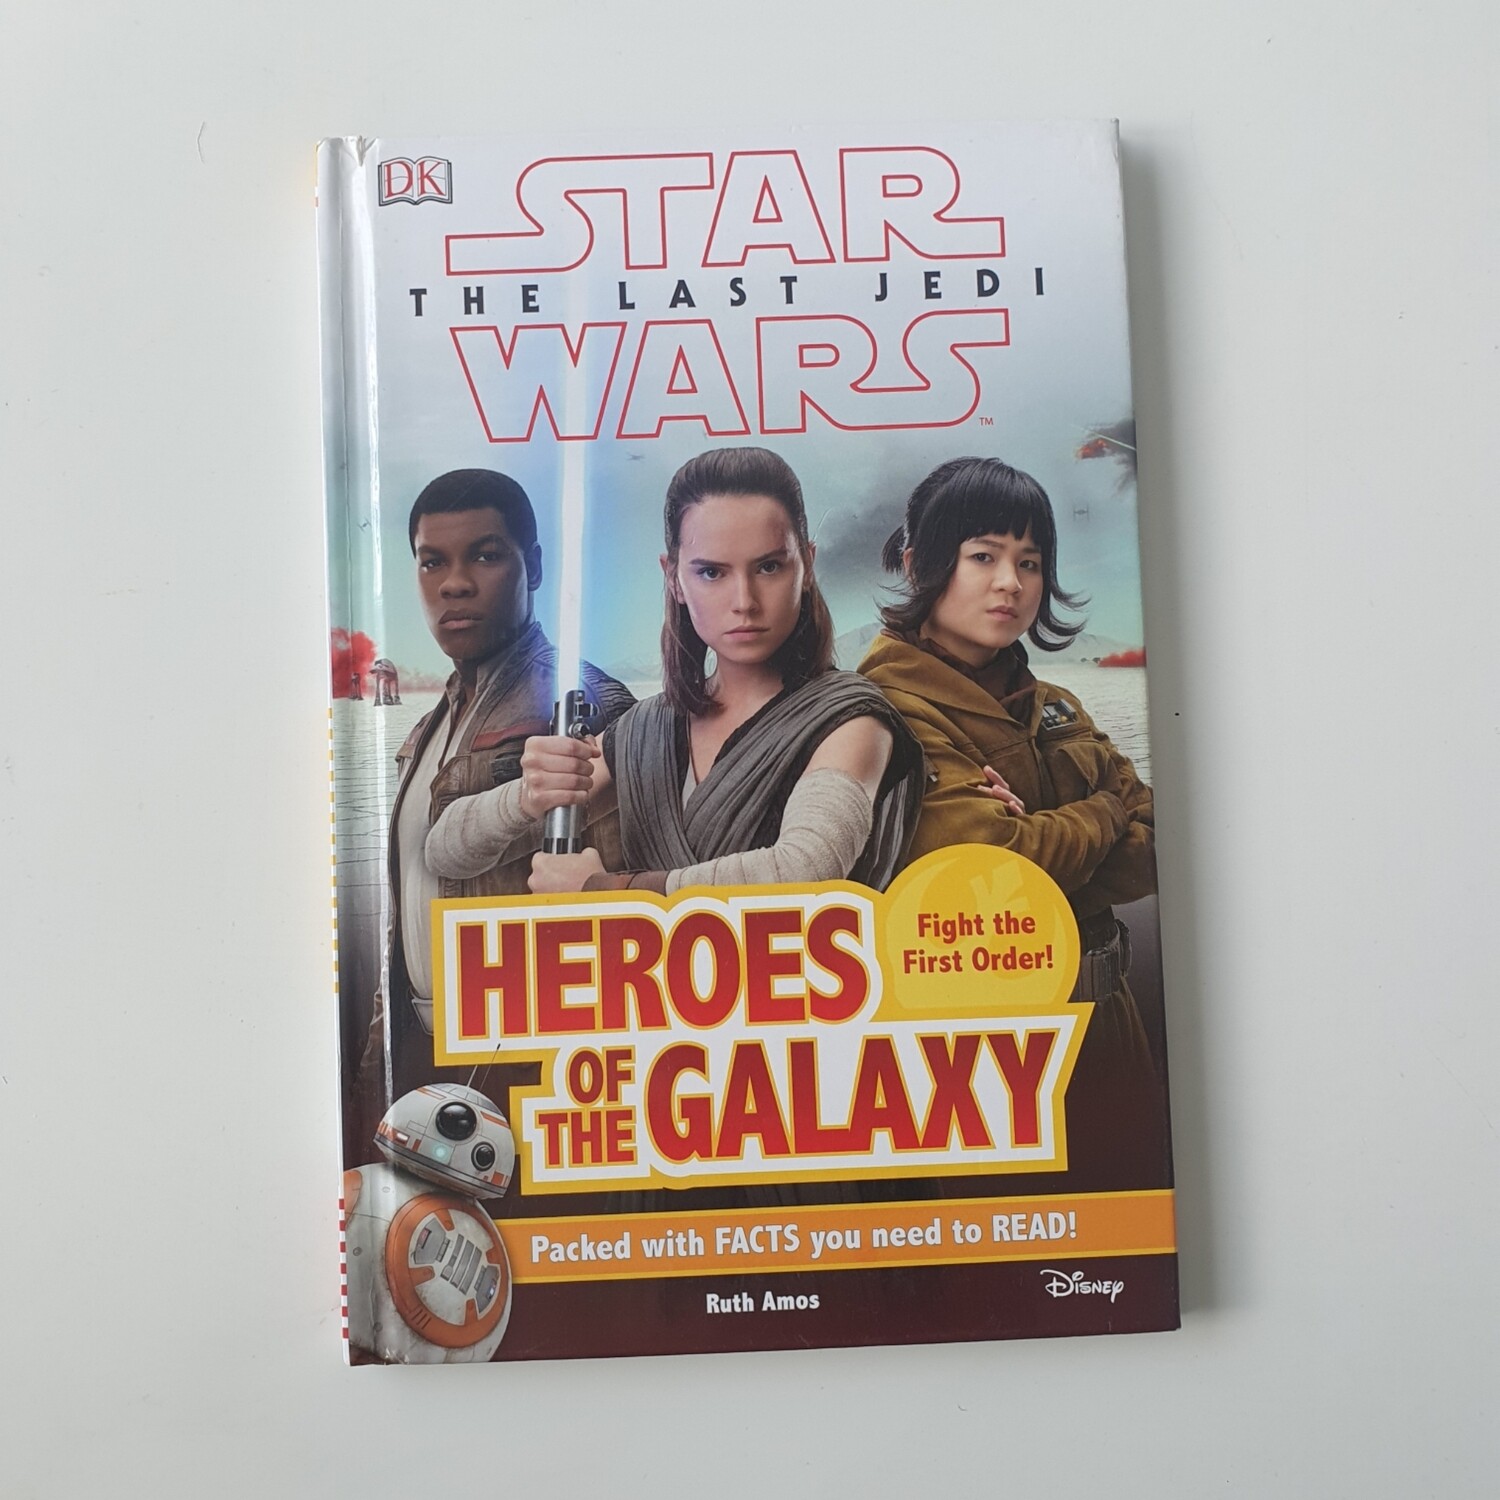 Star Wars, The Last Jedi - Heroes of the Galaxy